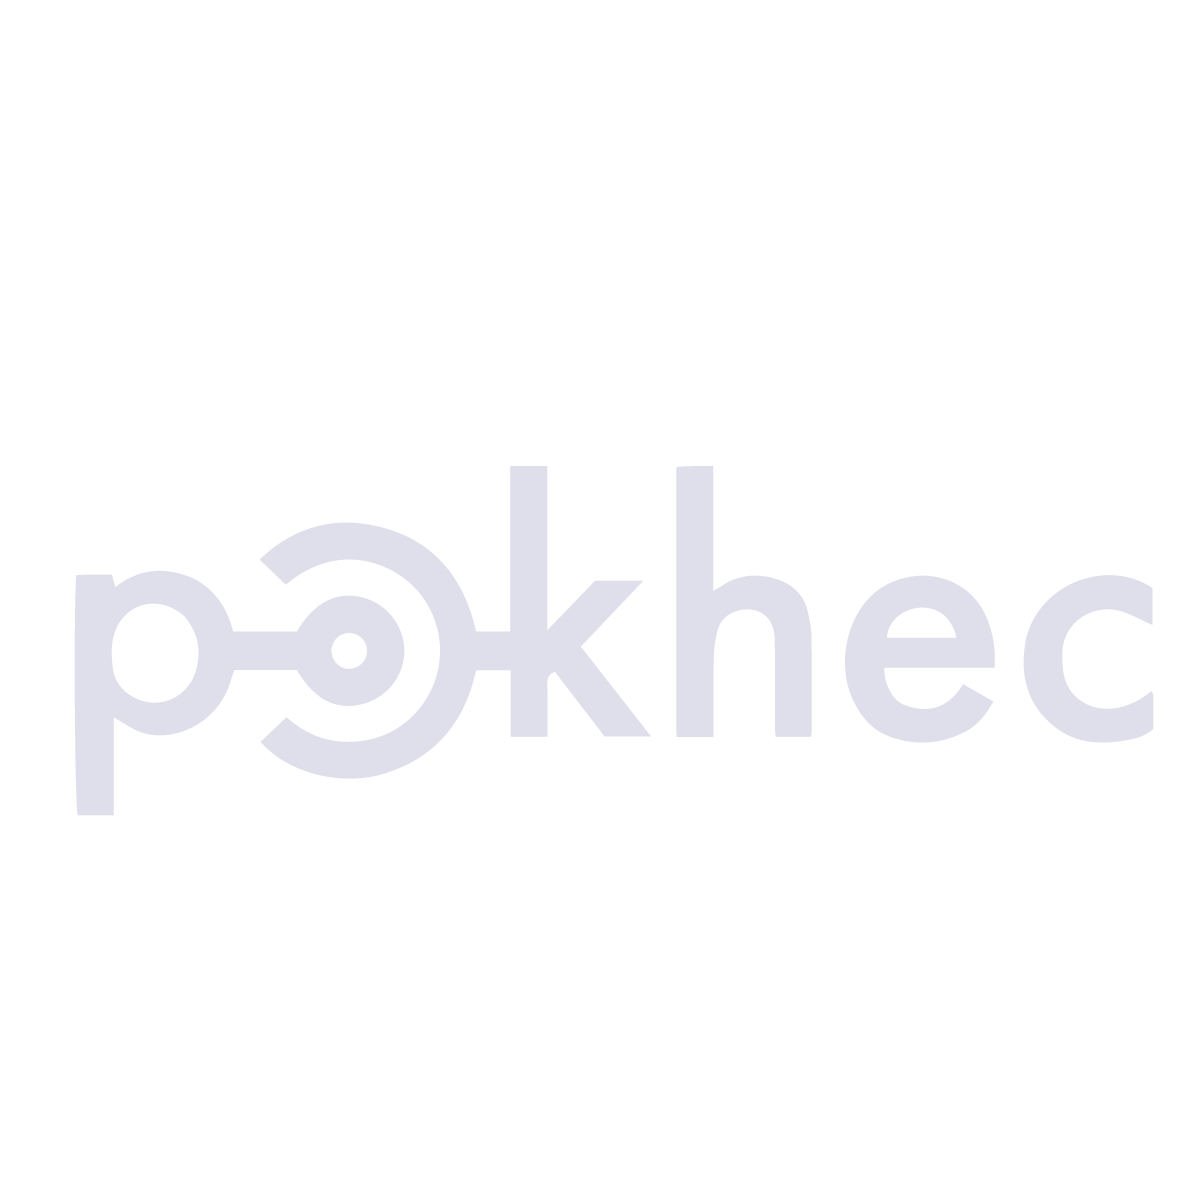 Pokhec logo